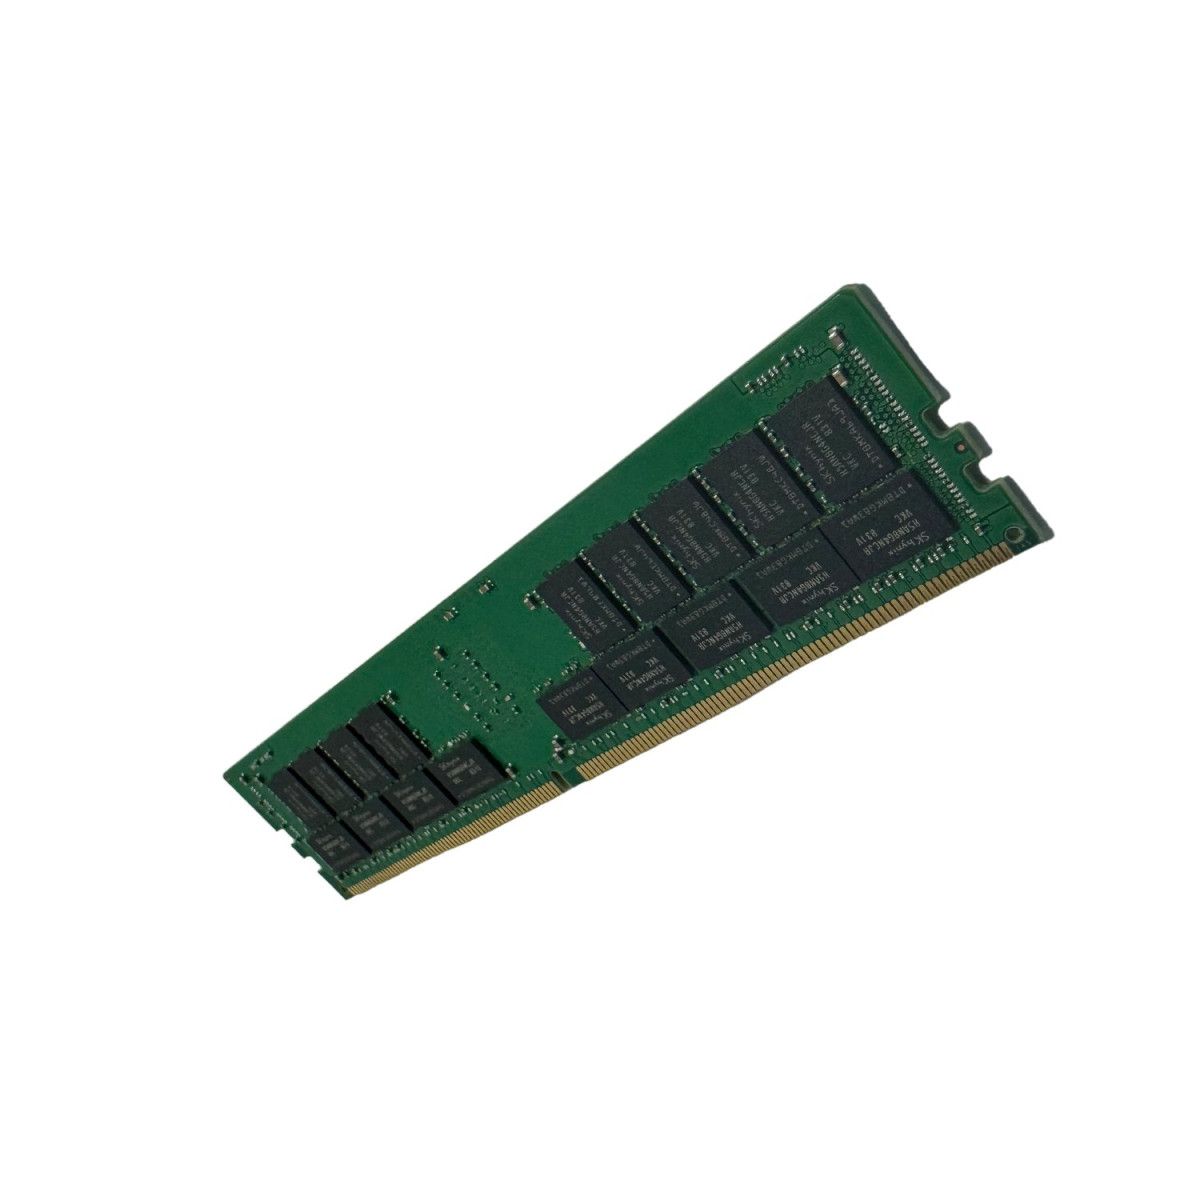 3TQ39AT-MS - Memstar 1x 8GB DDR4-2666 ECC UDIMM PC4-21300V-E - Mem-Star Compatibile OEM Memoria 1 - Memstar 